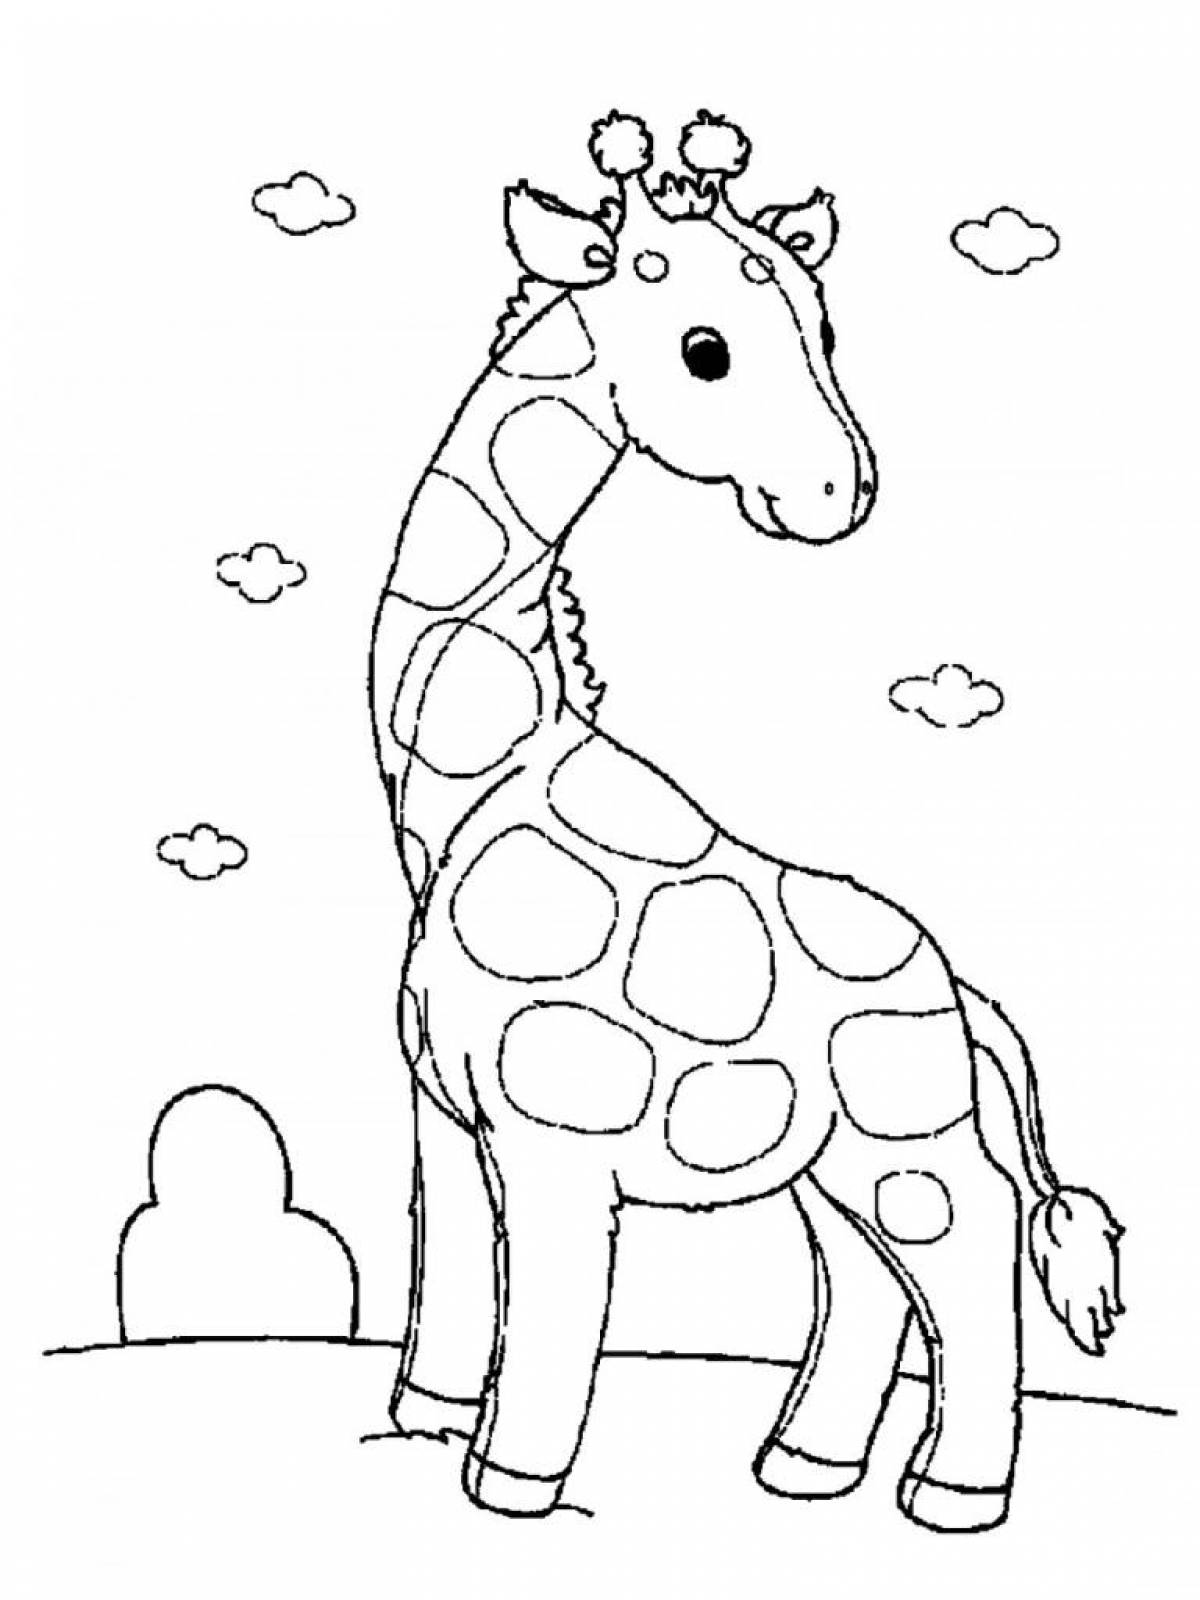 Giraffe live coloring for preschoolers